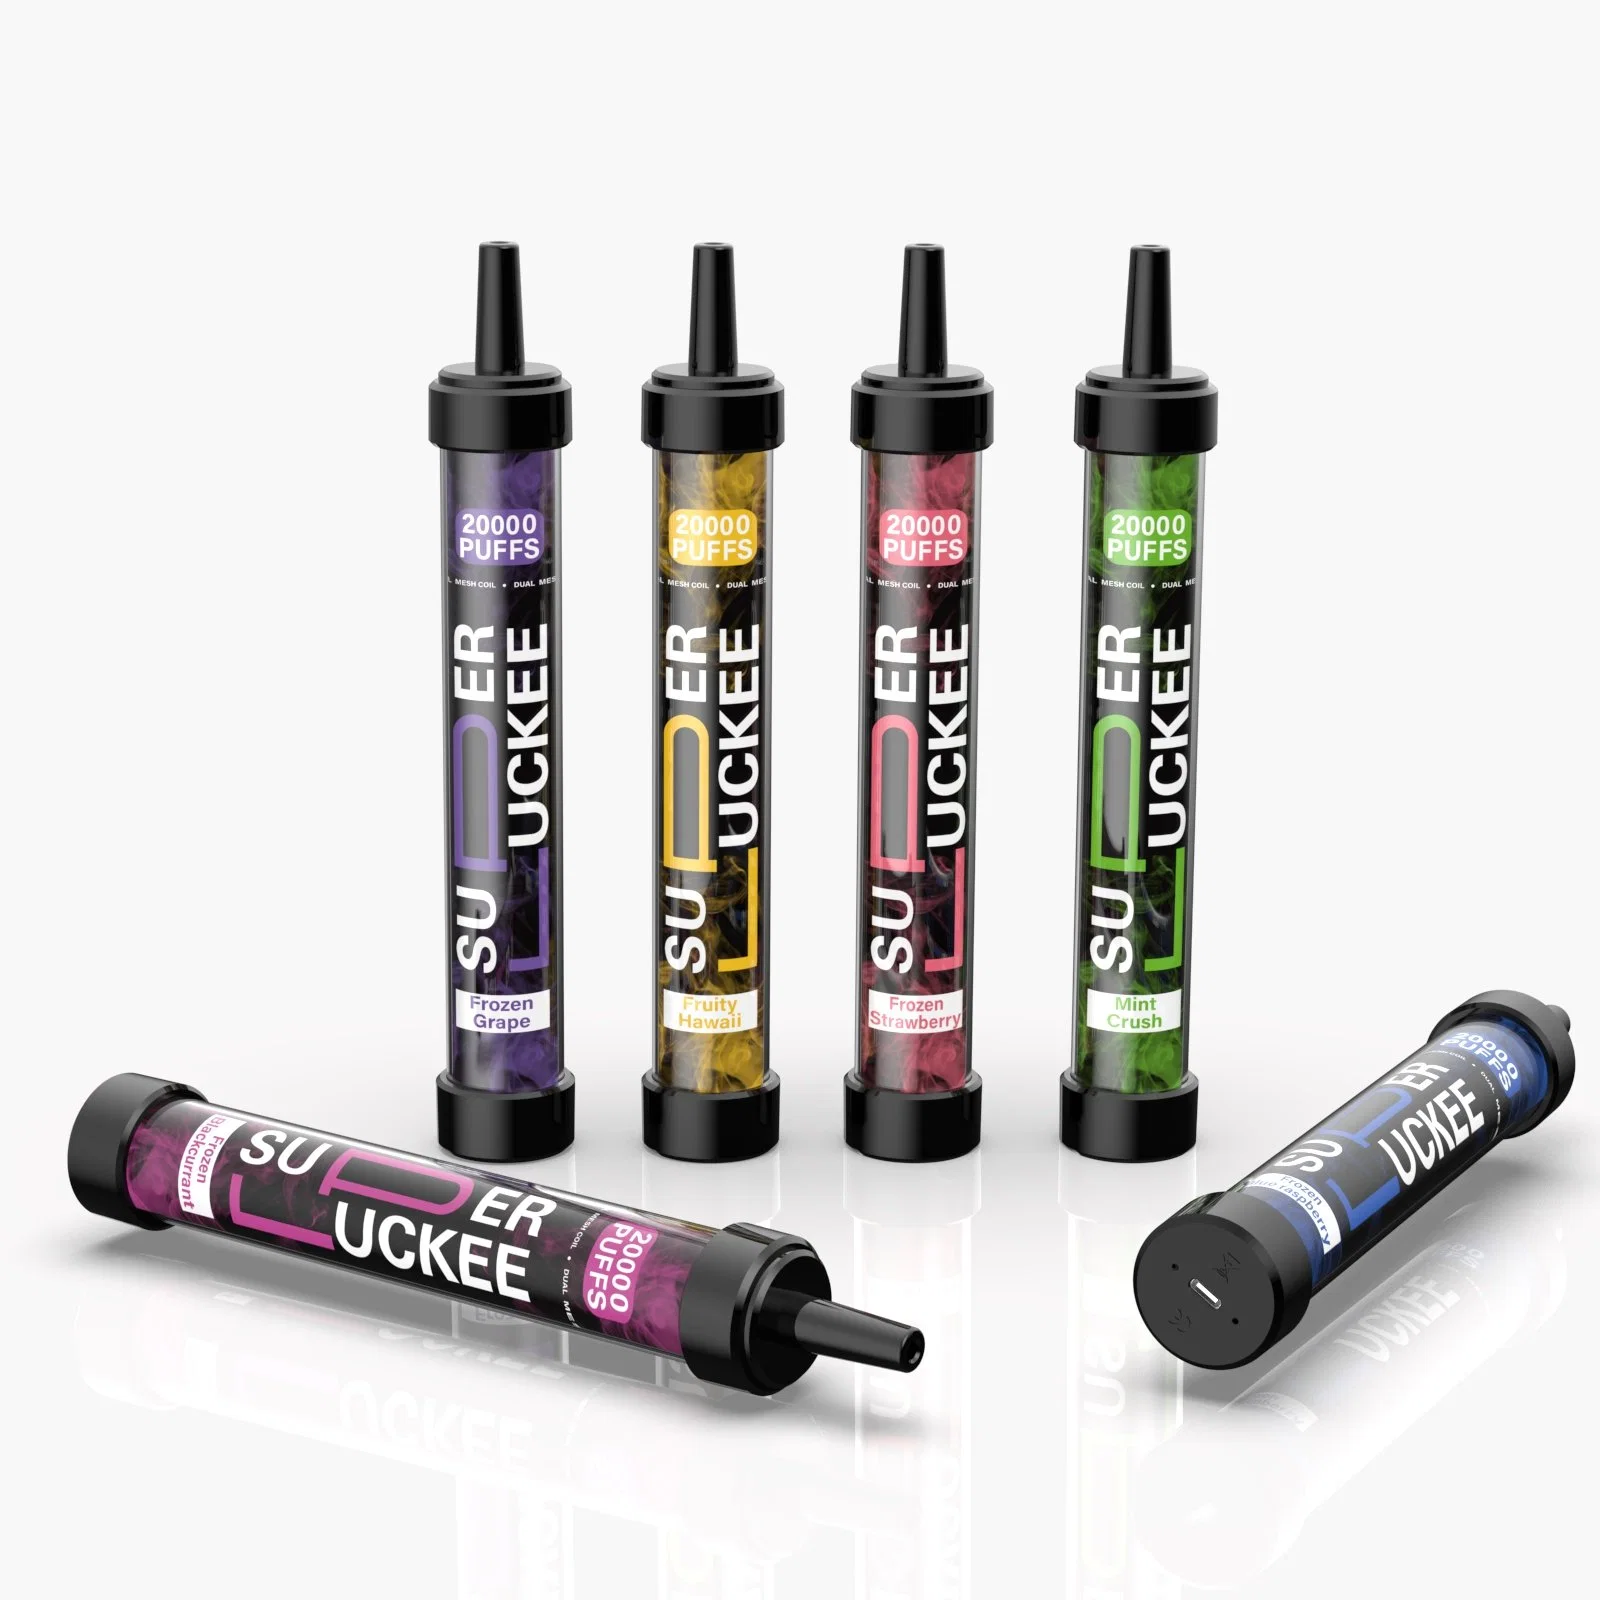 Luckee Vape Pen 20000 Puffs Wholesale 2024 for USA Russia Europe Middle East Market Factory E-Cigarette Boss Vape